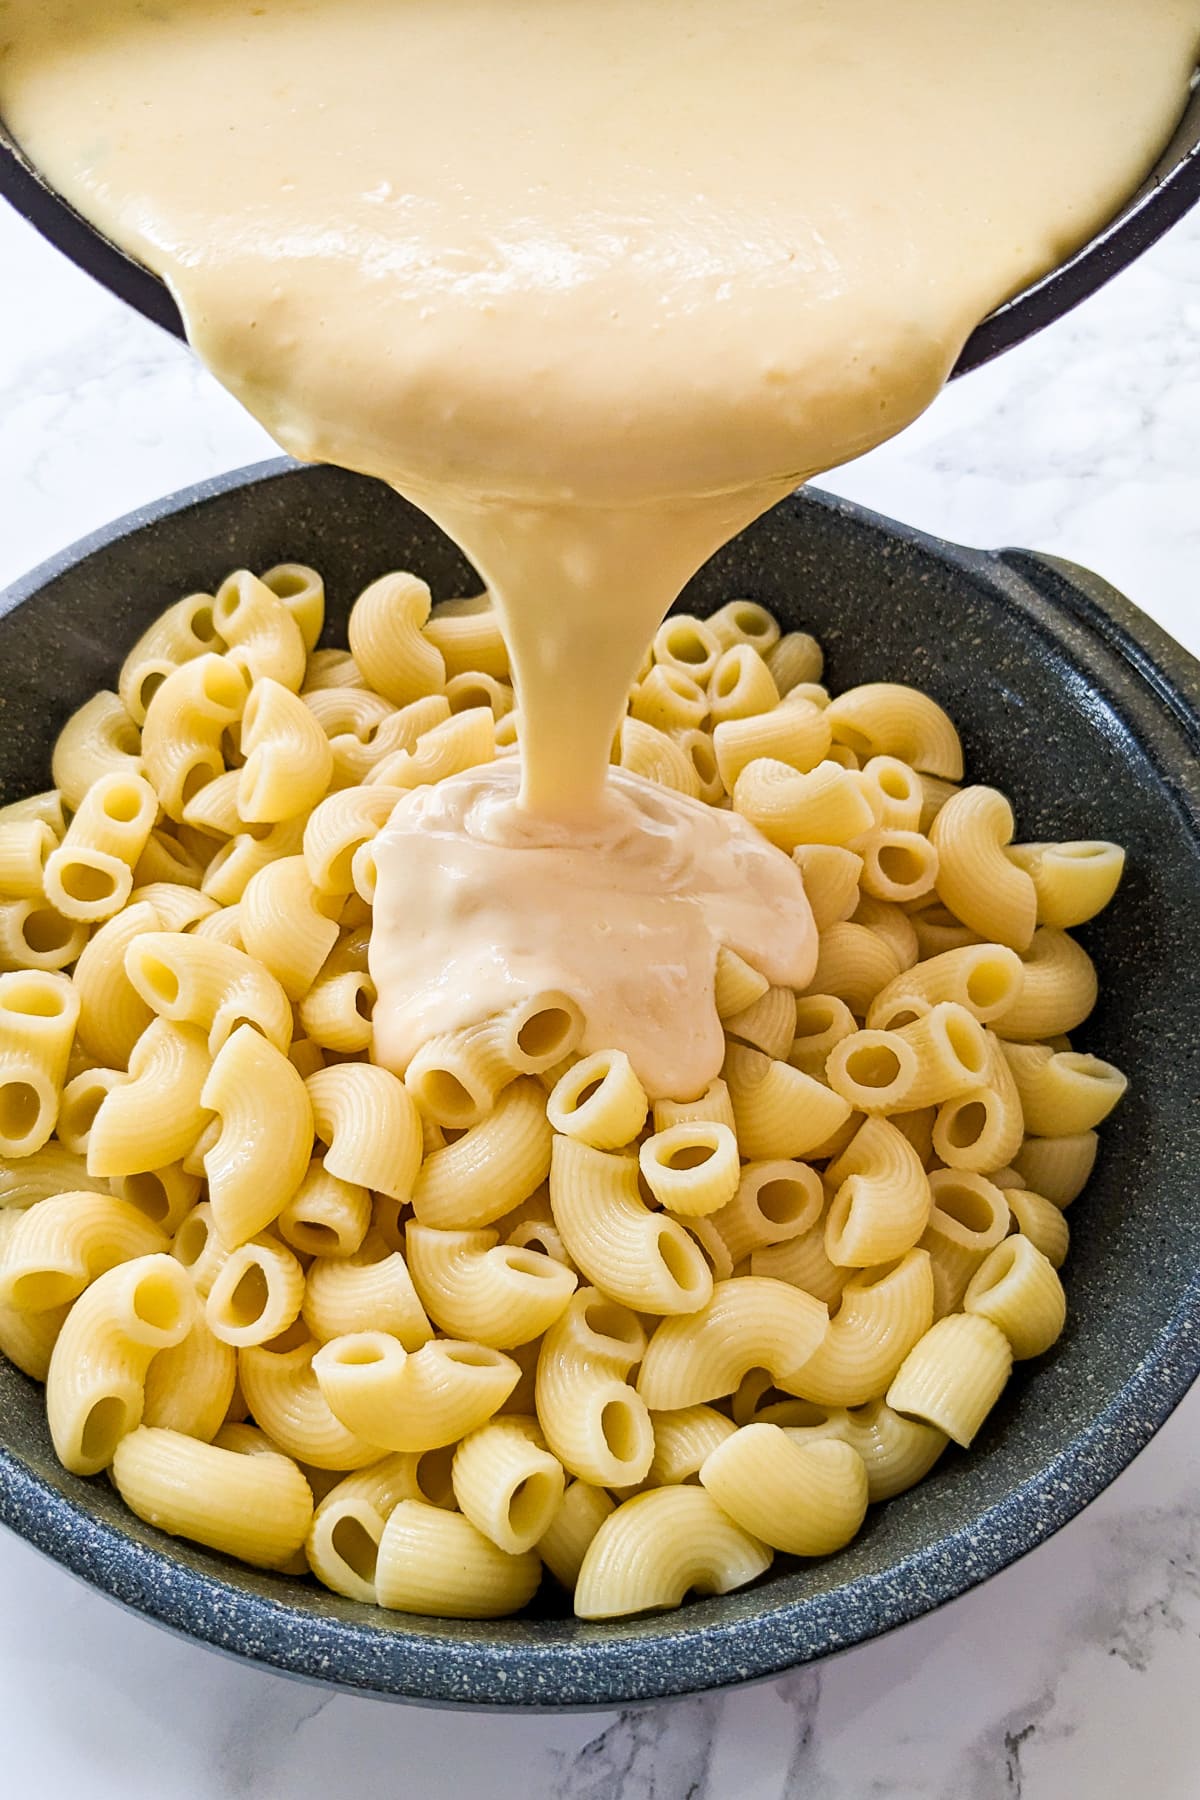 Pouring creamy sauce over boiled macaroni pasta.